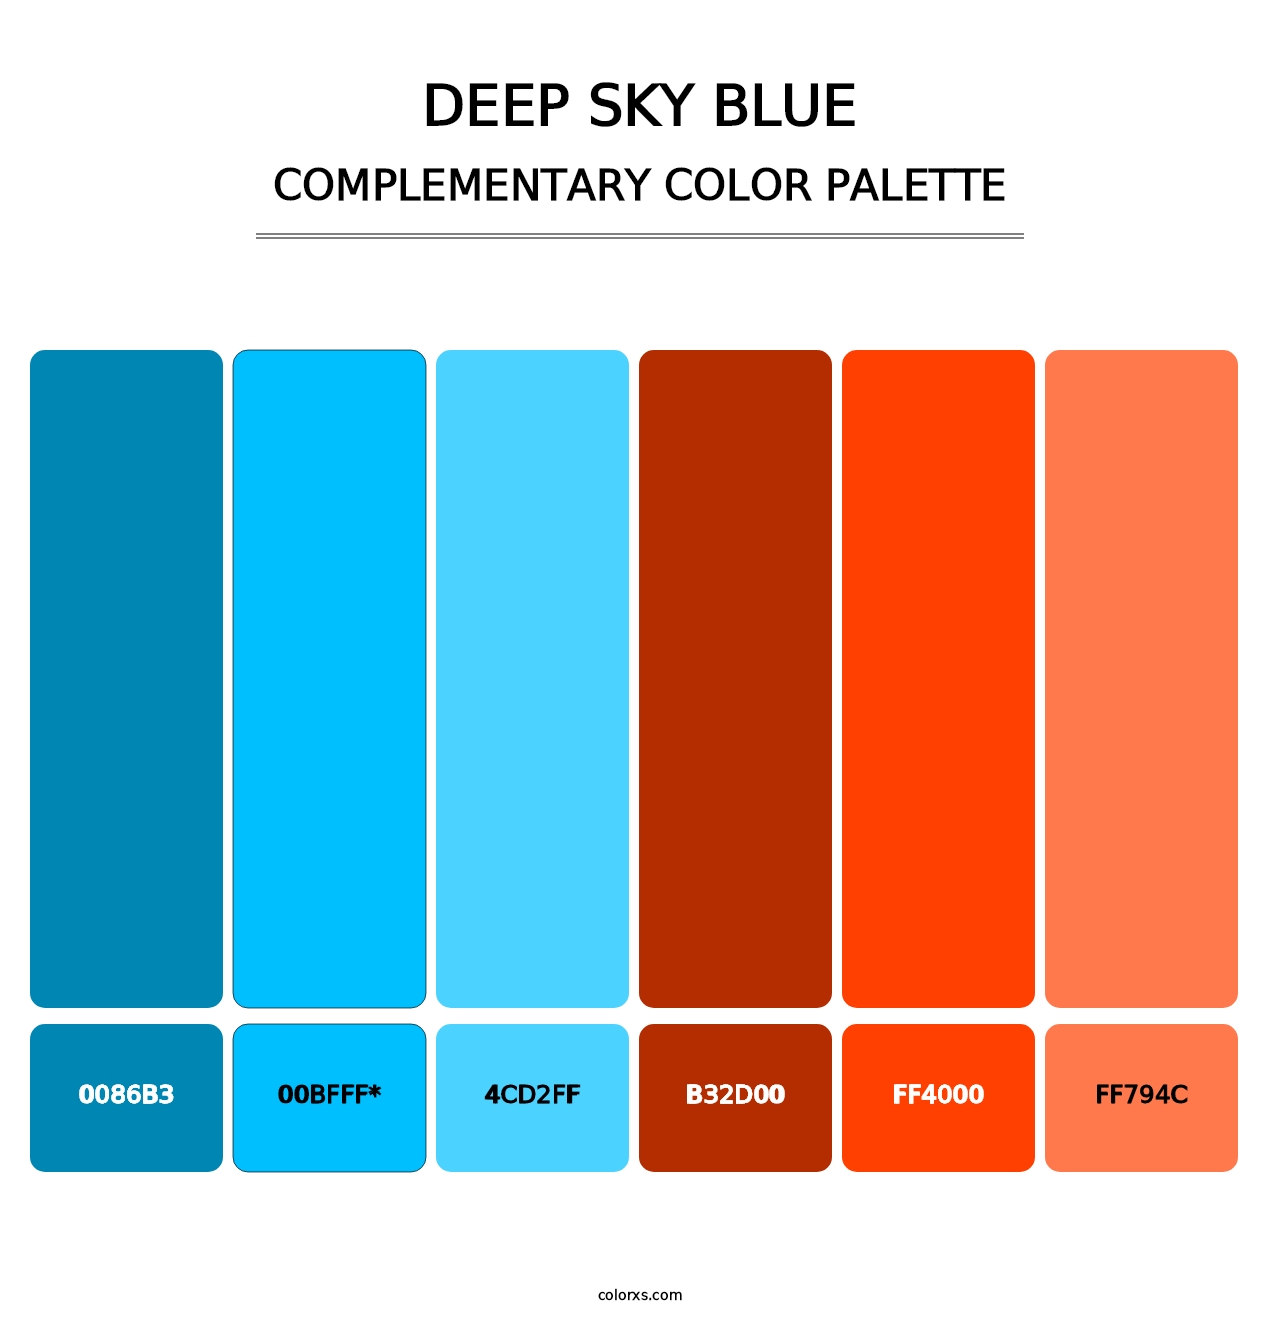 Deep Sky Blue - Complementary Color Palette